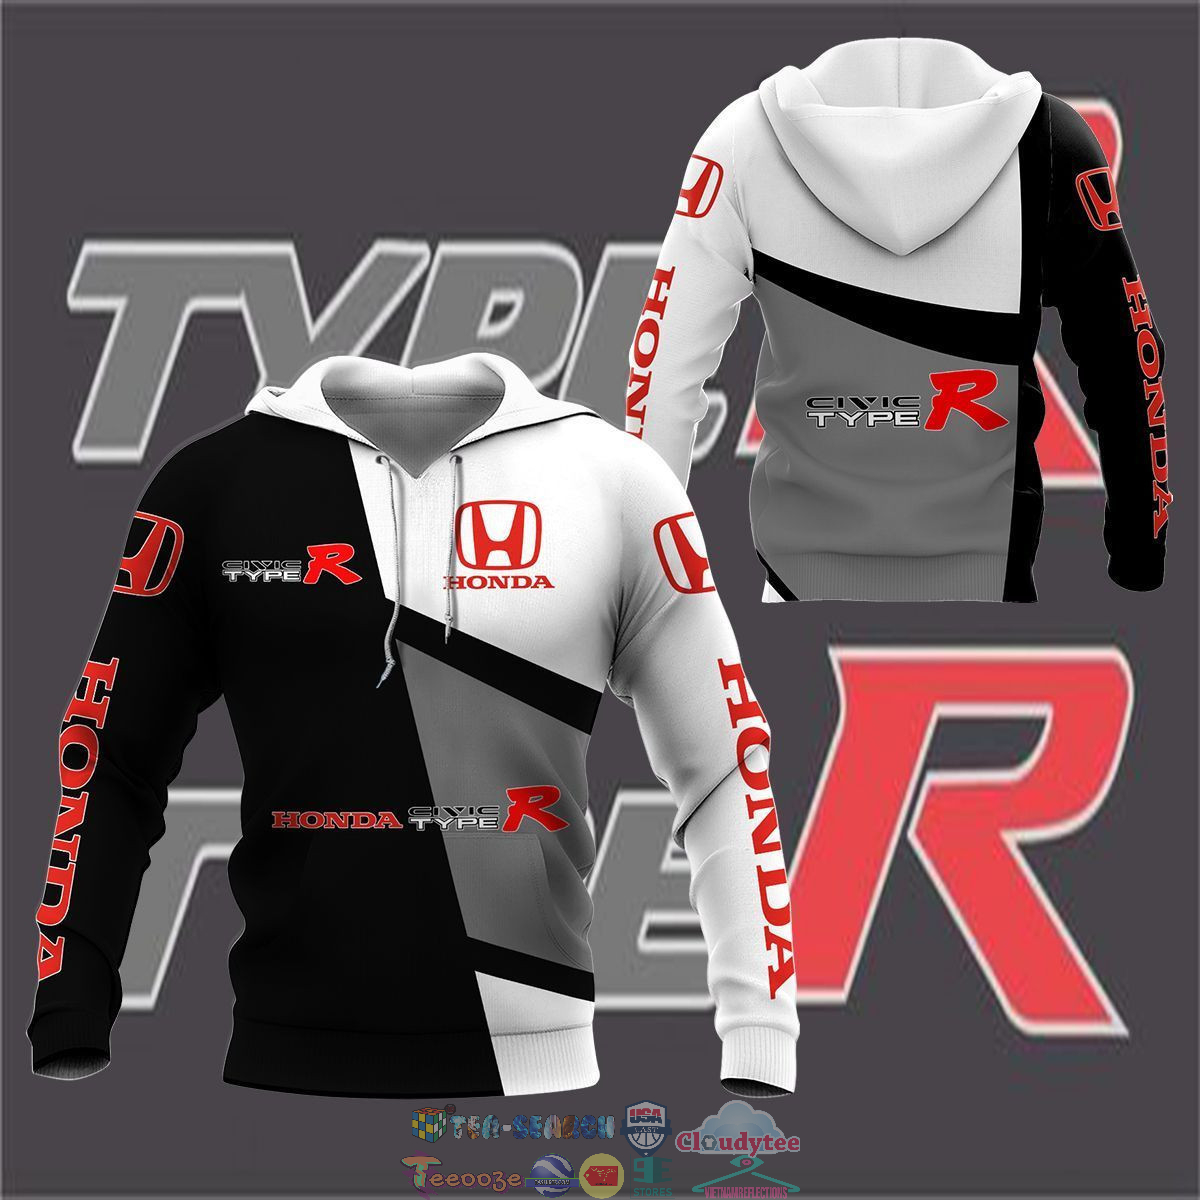 zfTR9f6y-TH130822-24xxxHonda-Civic-Type-R-ver-2-3D-hoodie-and-t-shirt3.jpg